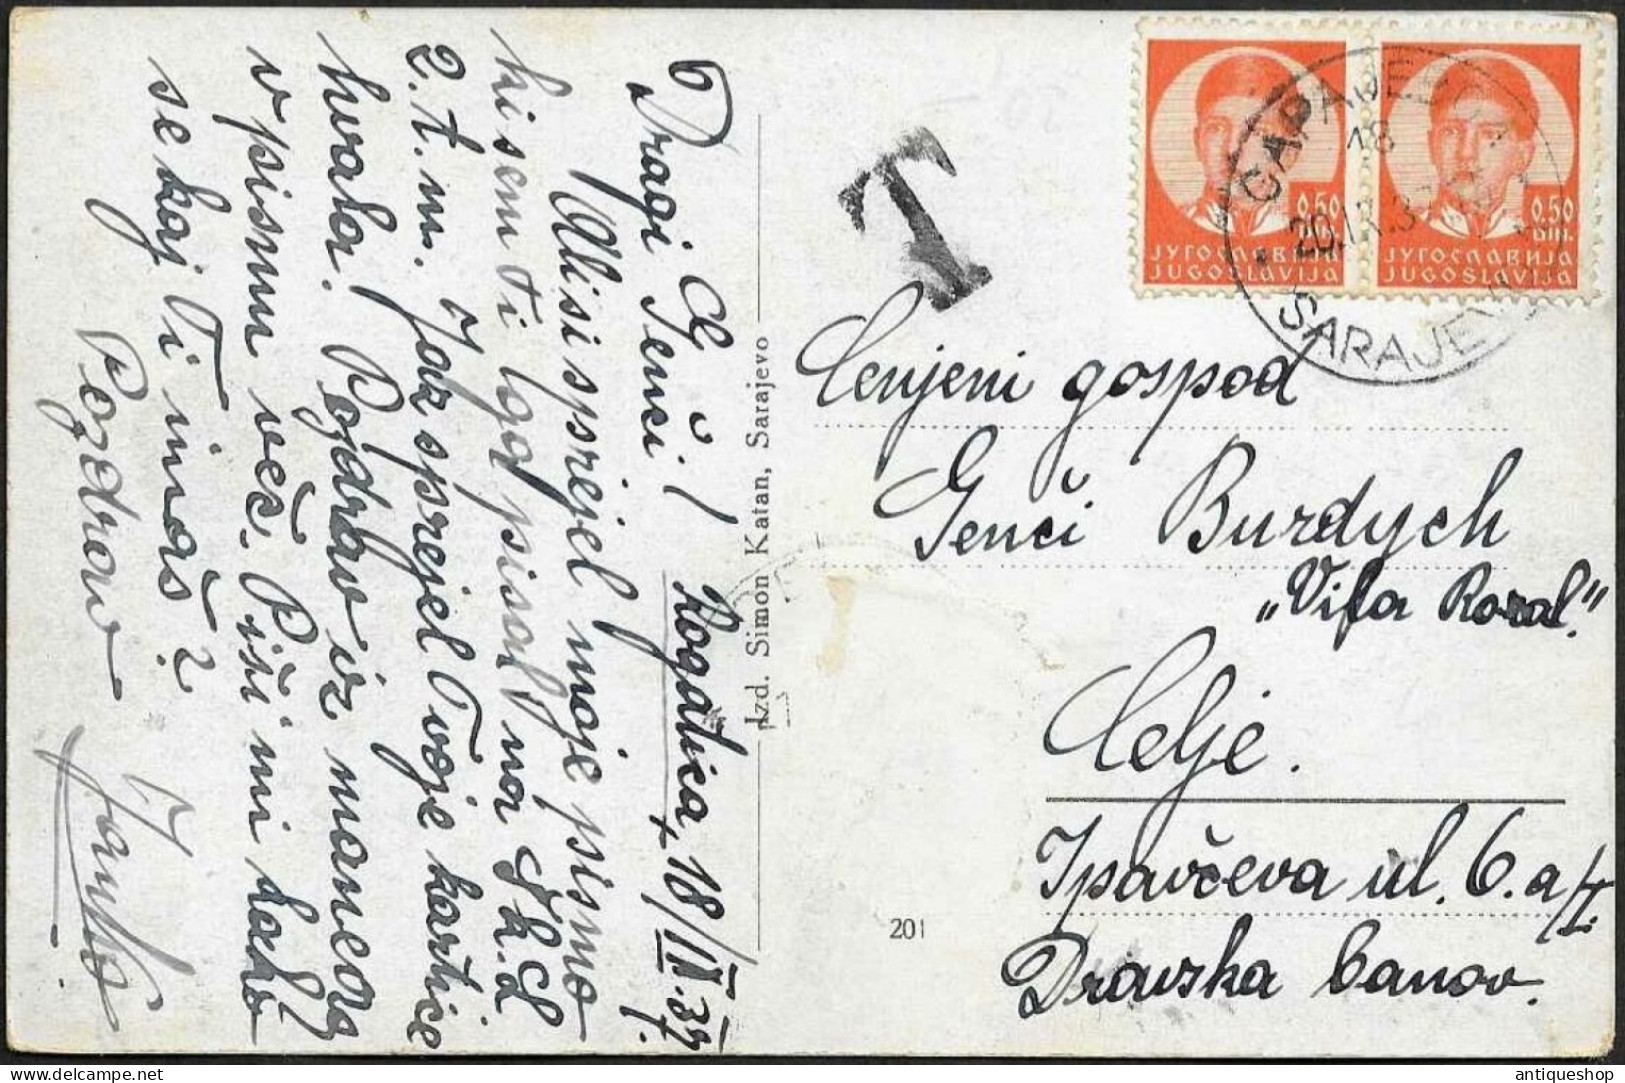 Bosnia And Herzegovina-----Rogatica-----old Postcard - Bosnia And Herzegovina